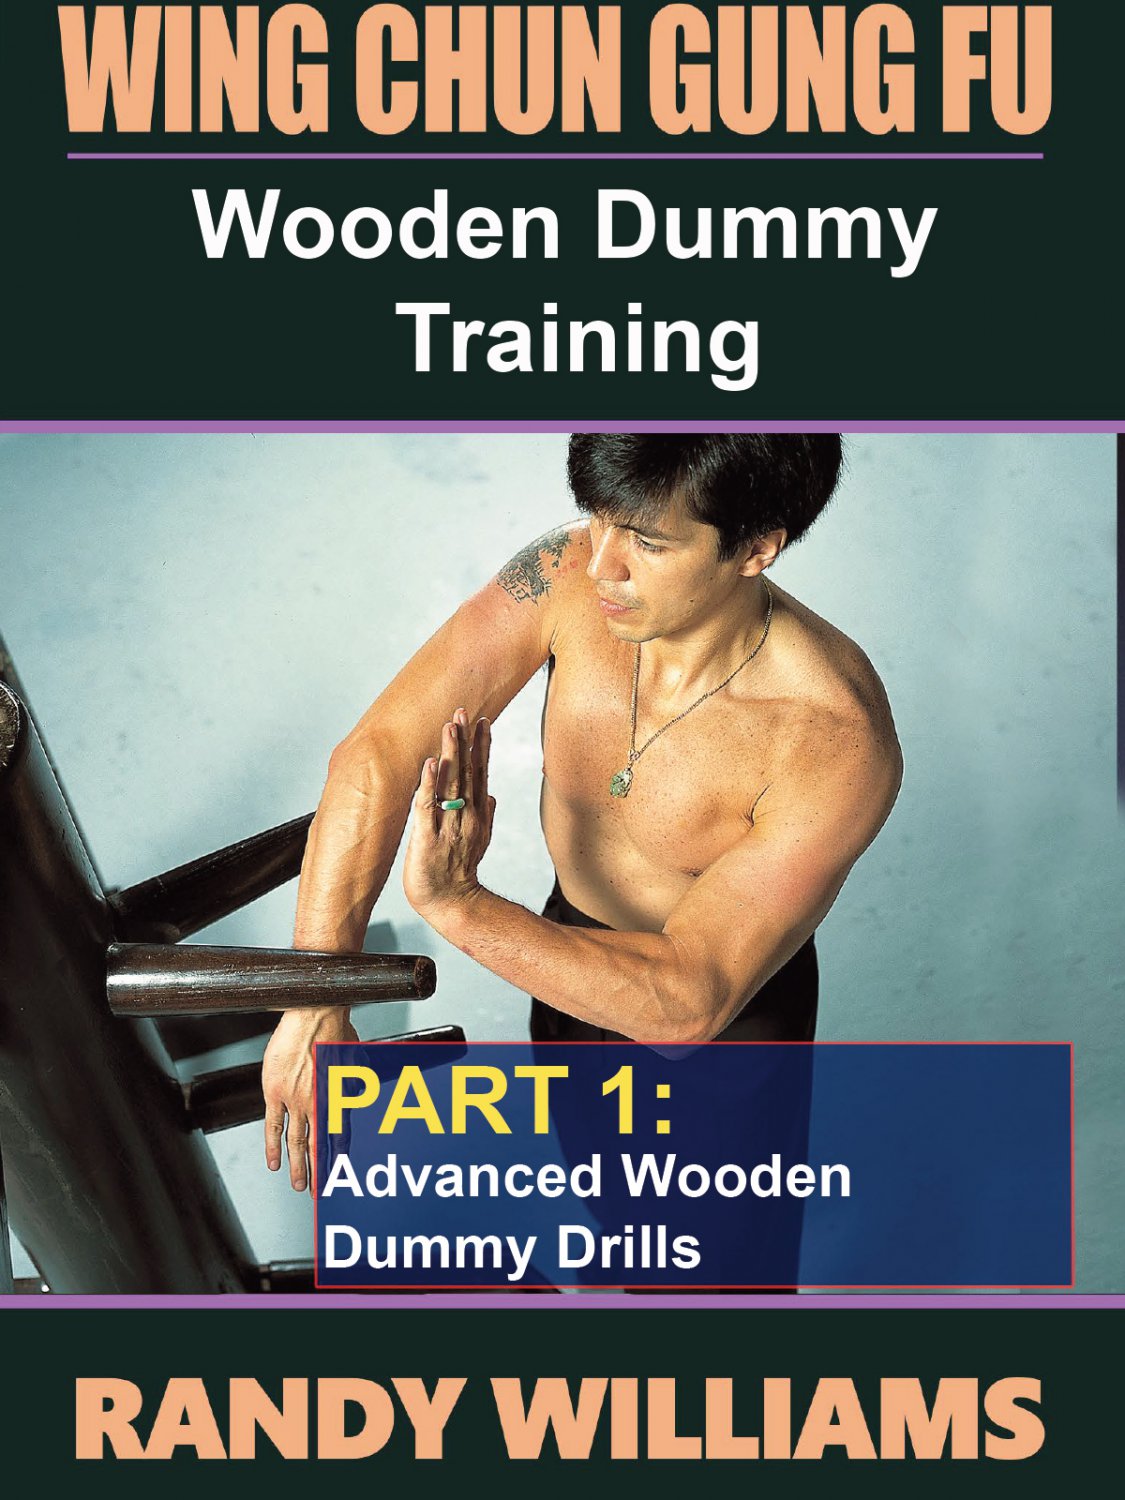 VD5035A  Wing Chun Gung Fu Wooden Dummy Training #1 Advanced Drills DVD Randy Williams